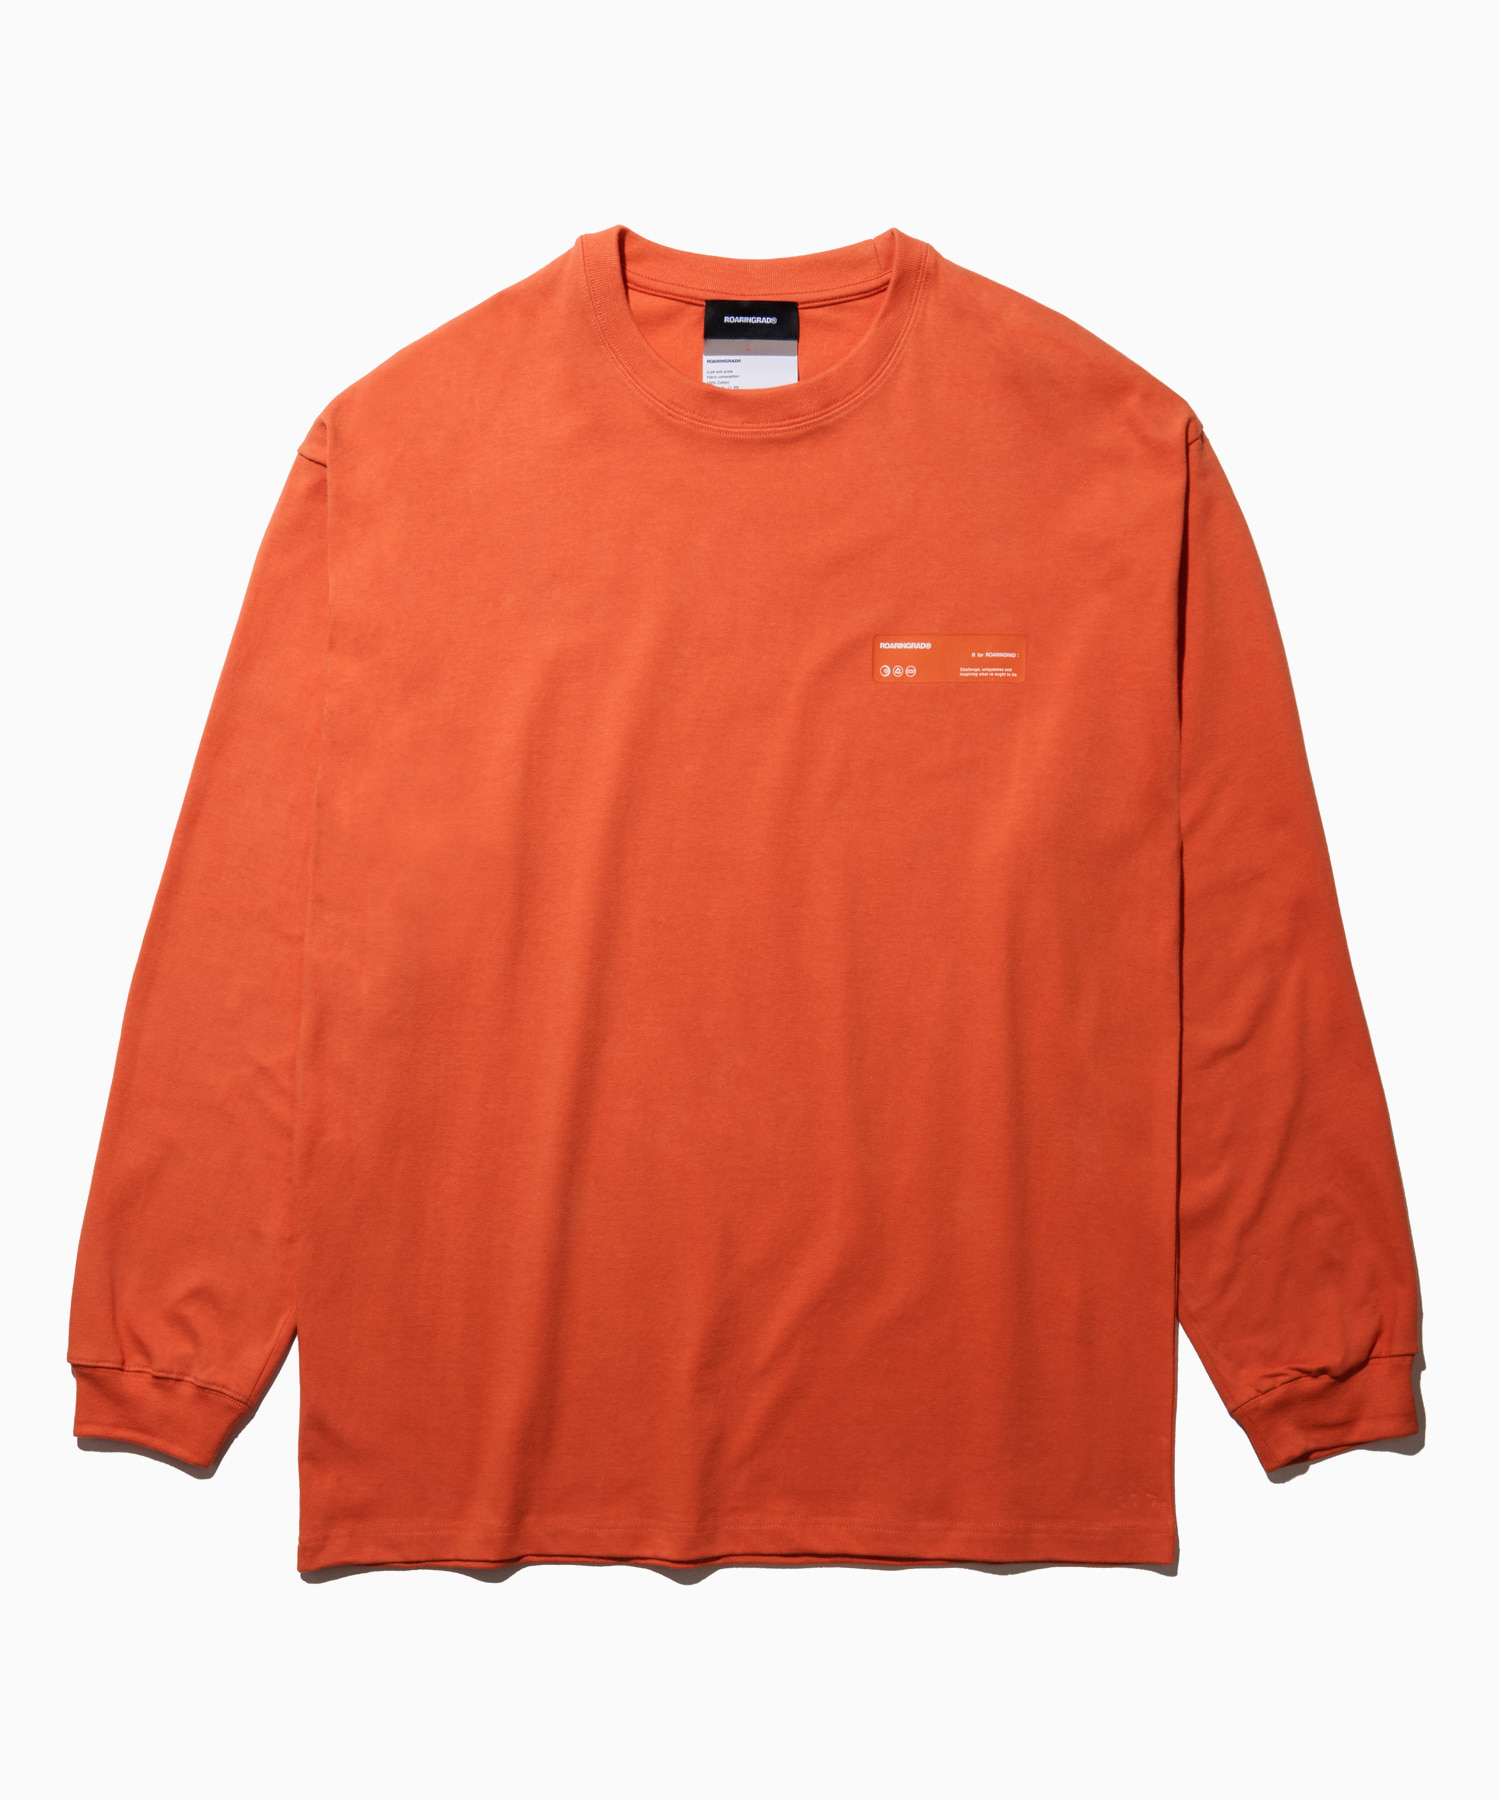 flim signature long sleeved orange - 로어링라드(ROARINGRAD)